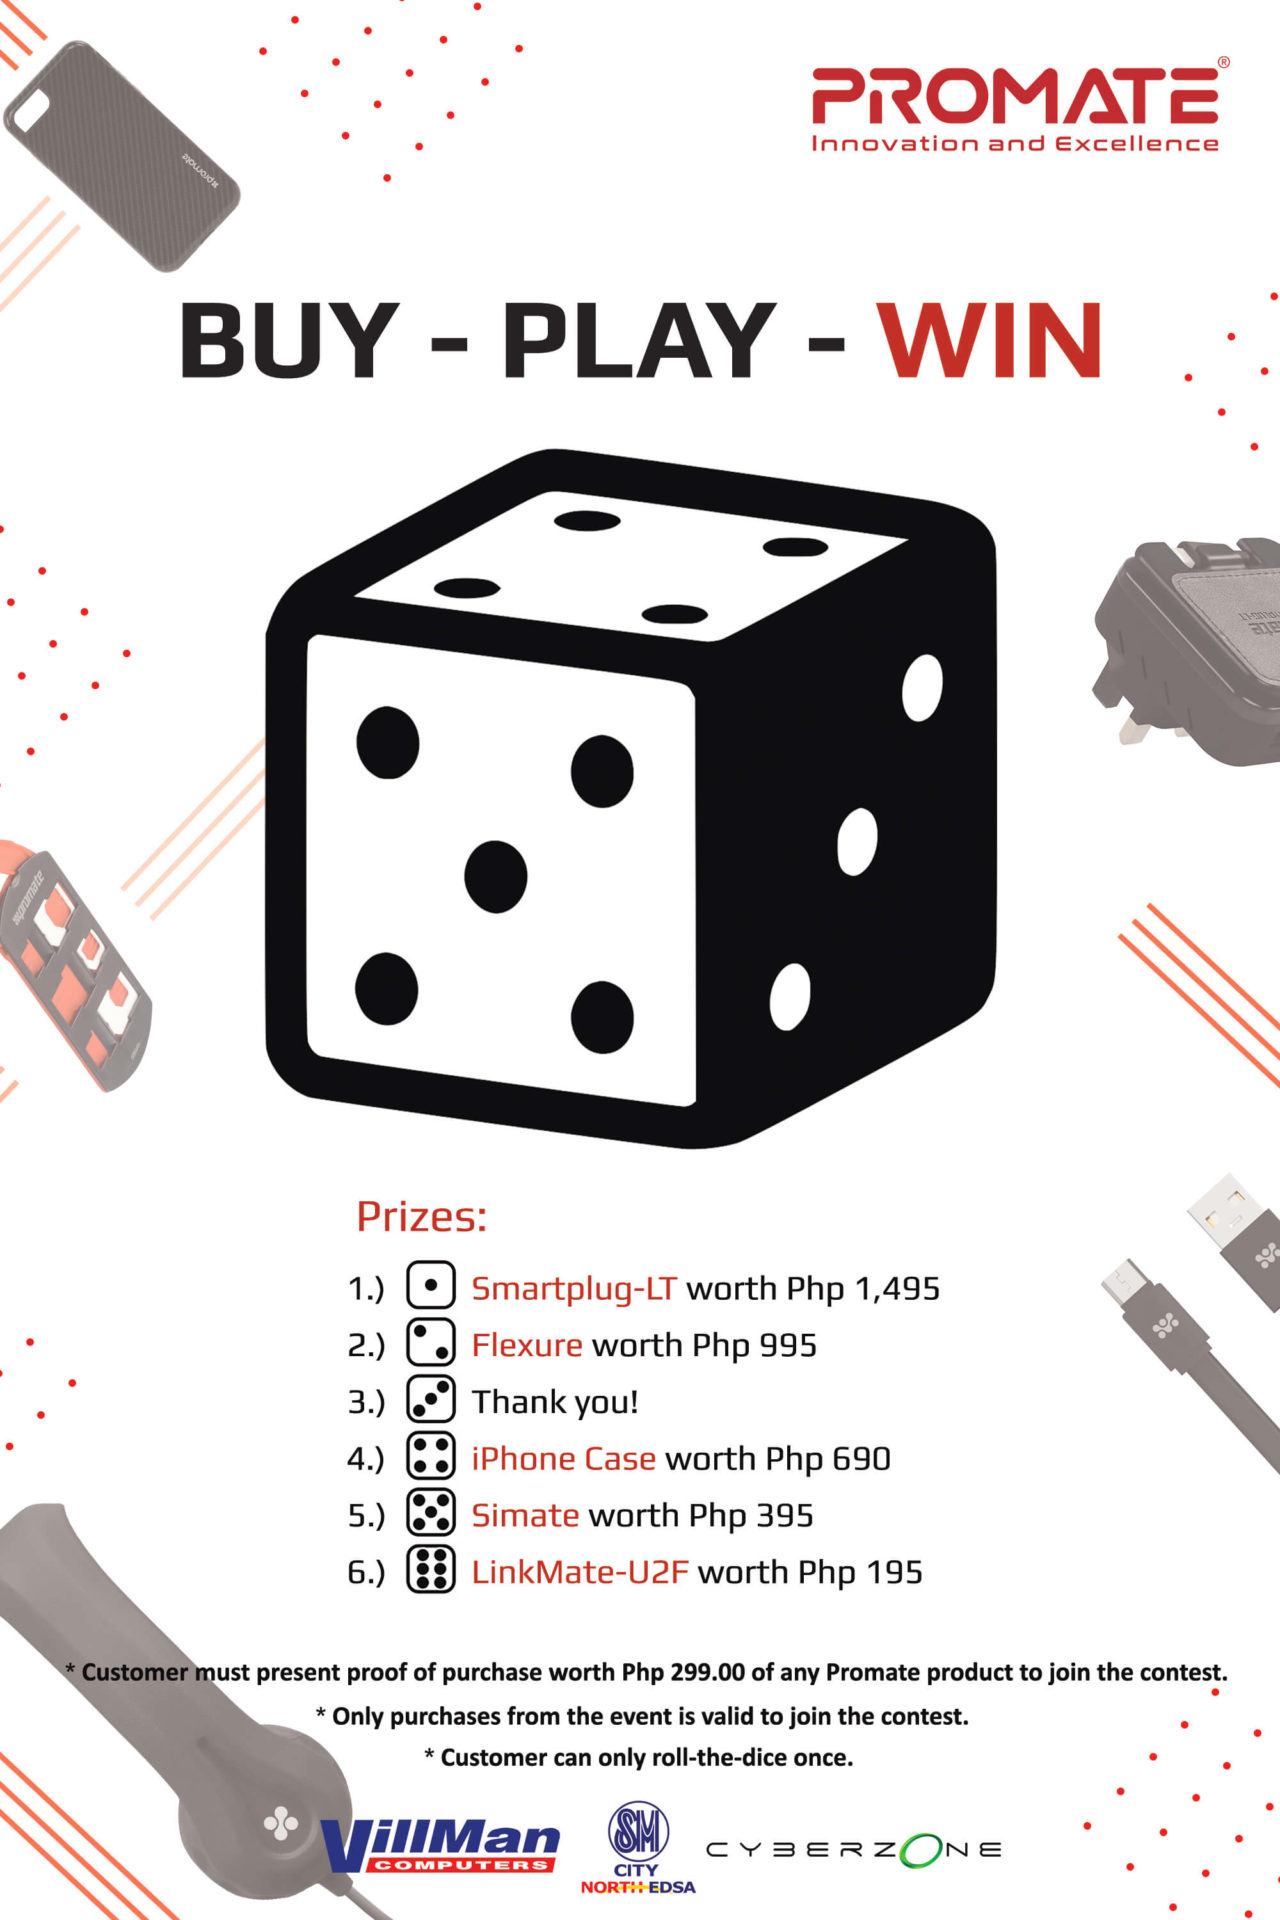 Buy Play Win PromateXVillMan SM North Cyberzone 1